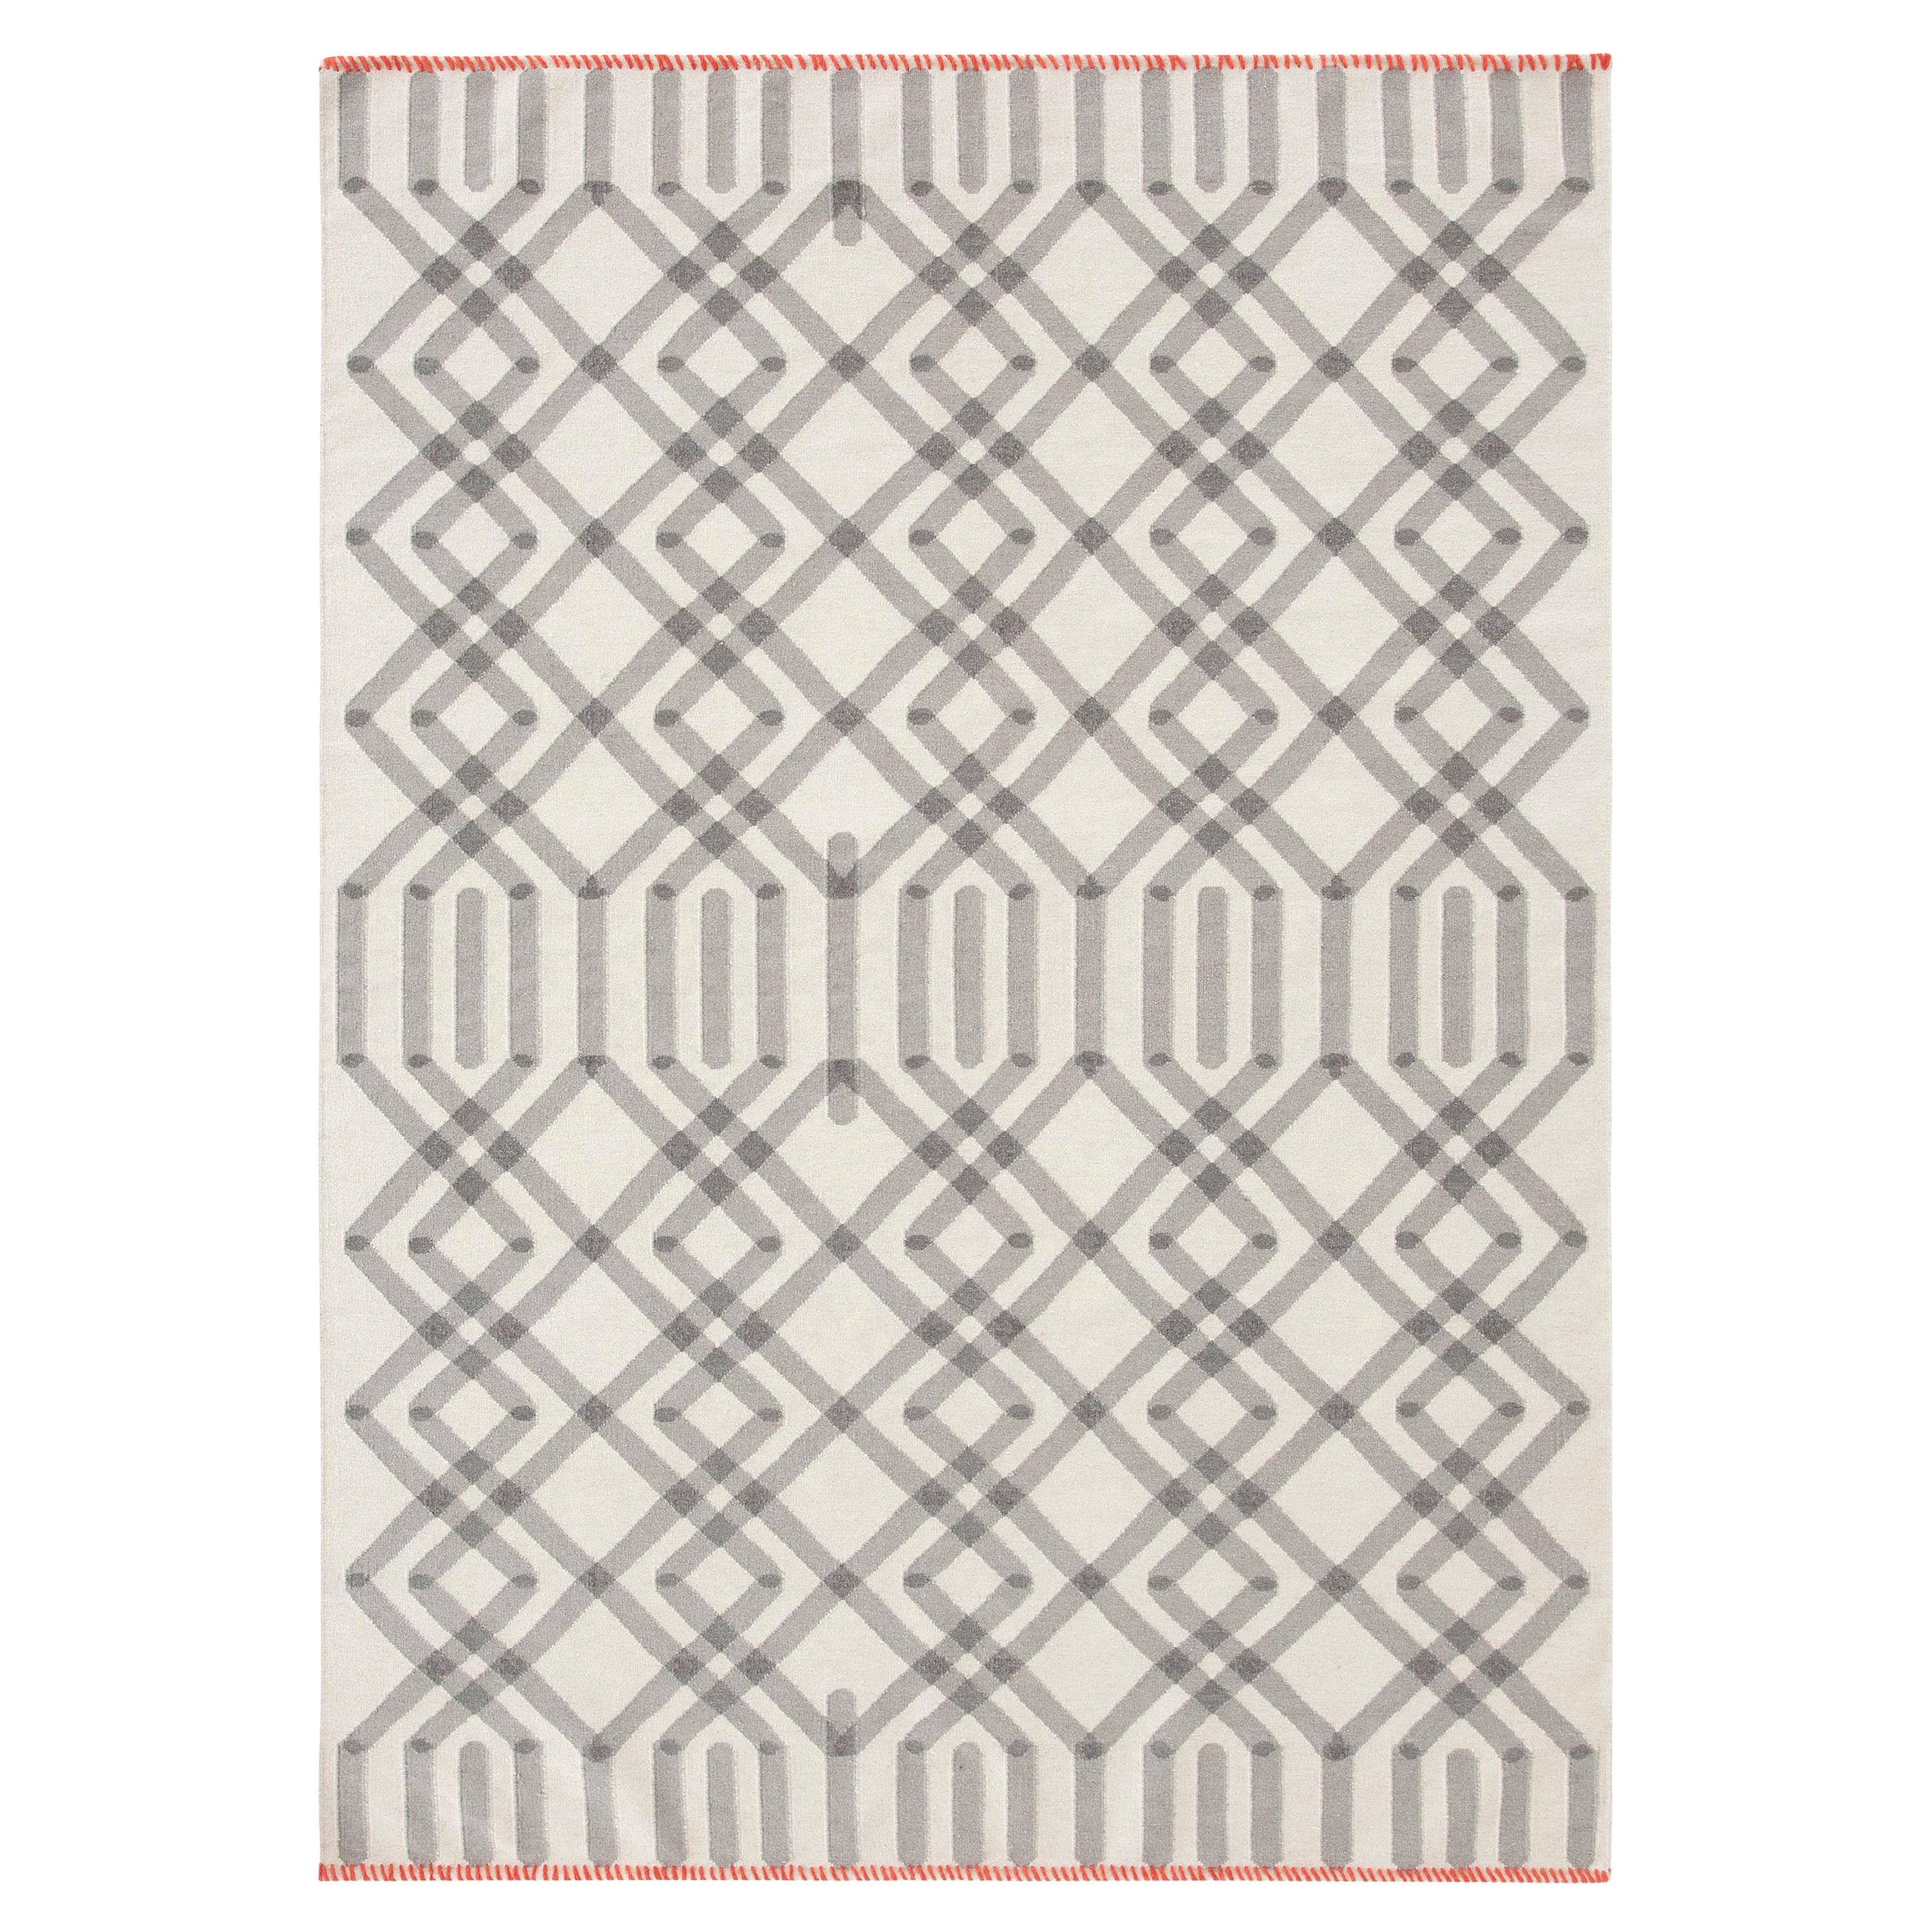 Kilim Technique Duna Medium Rug in Grey by Odosdesign For Sale